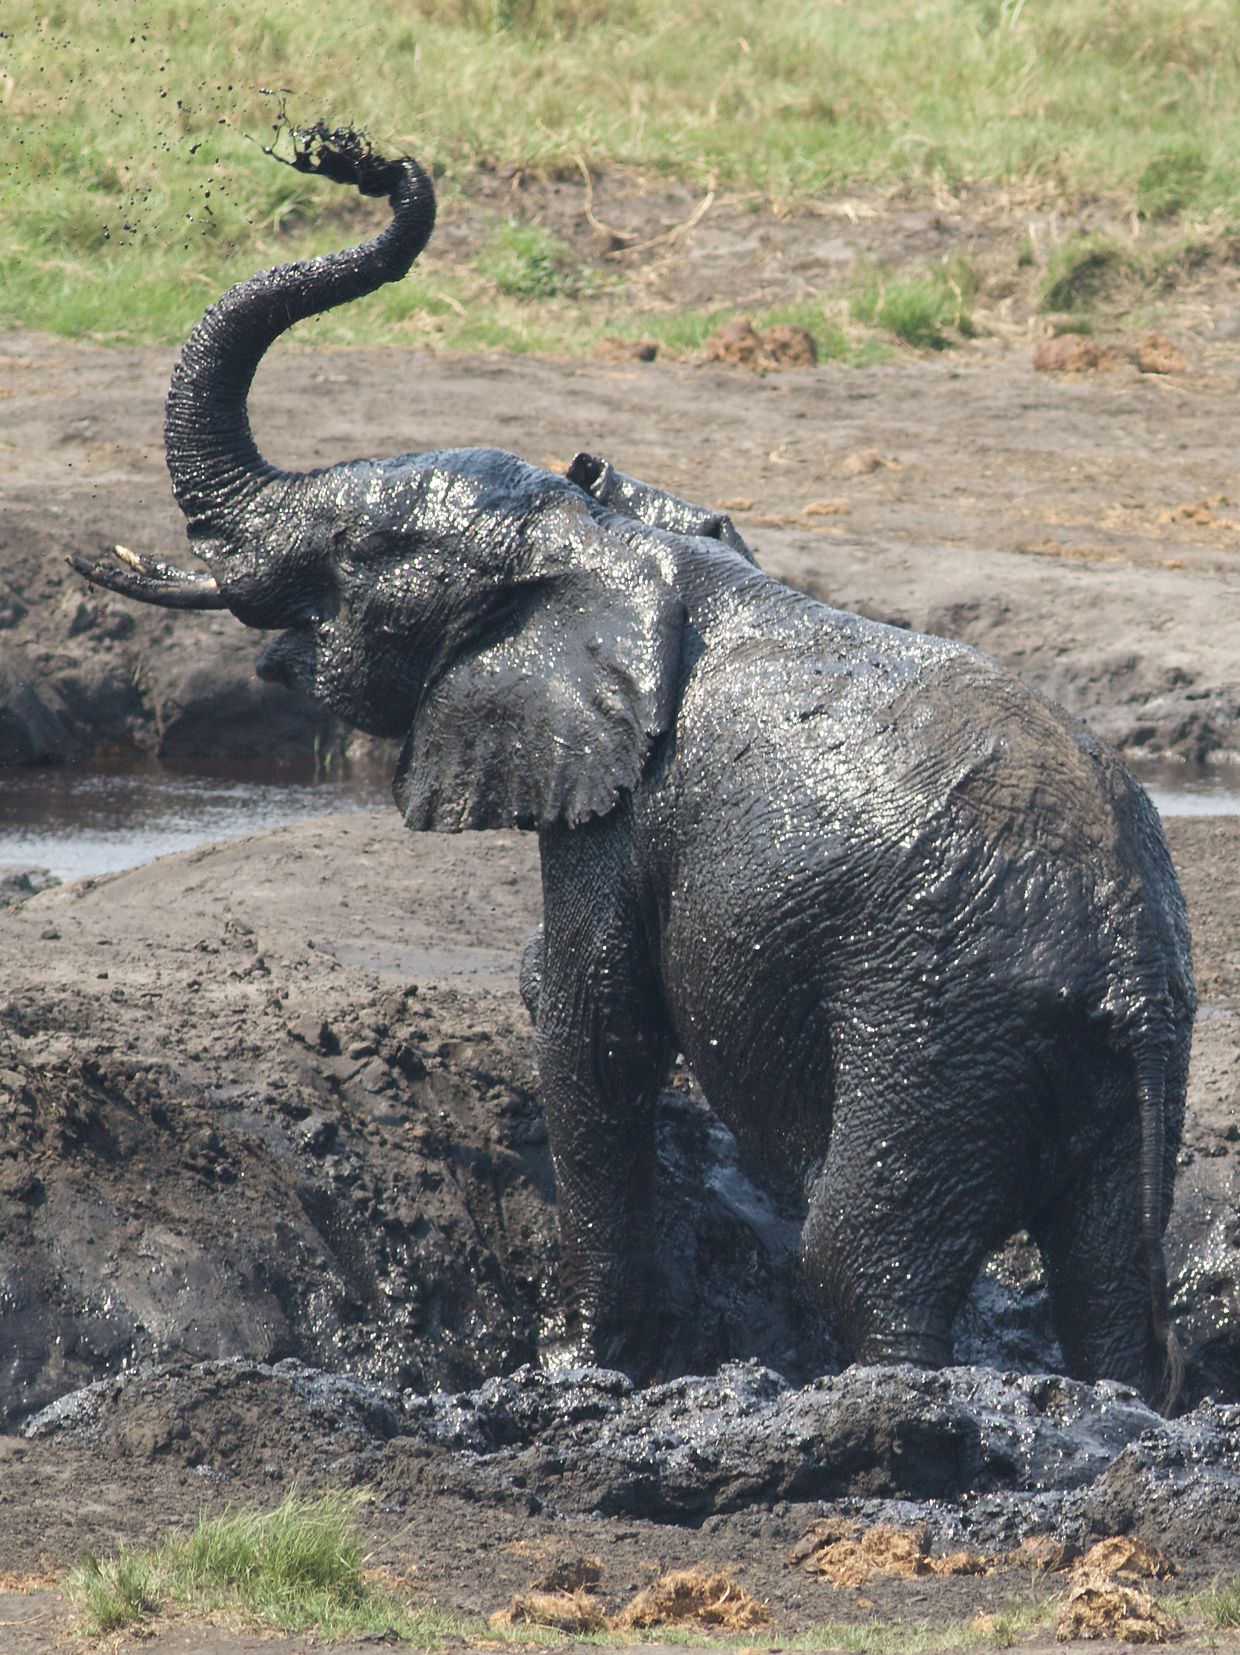 An elephant enjoying the mud